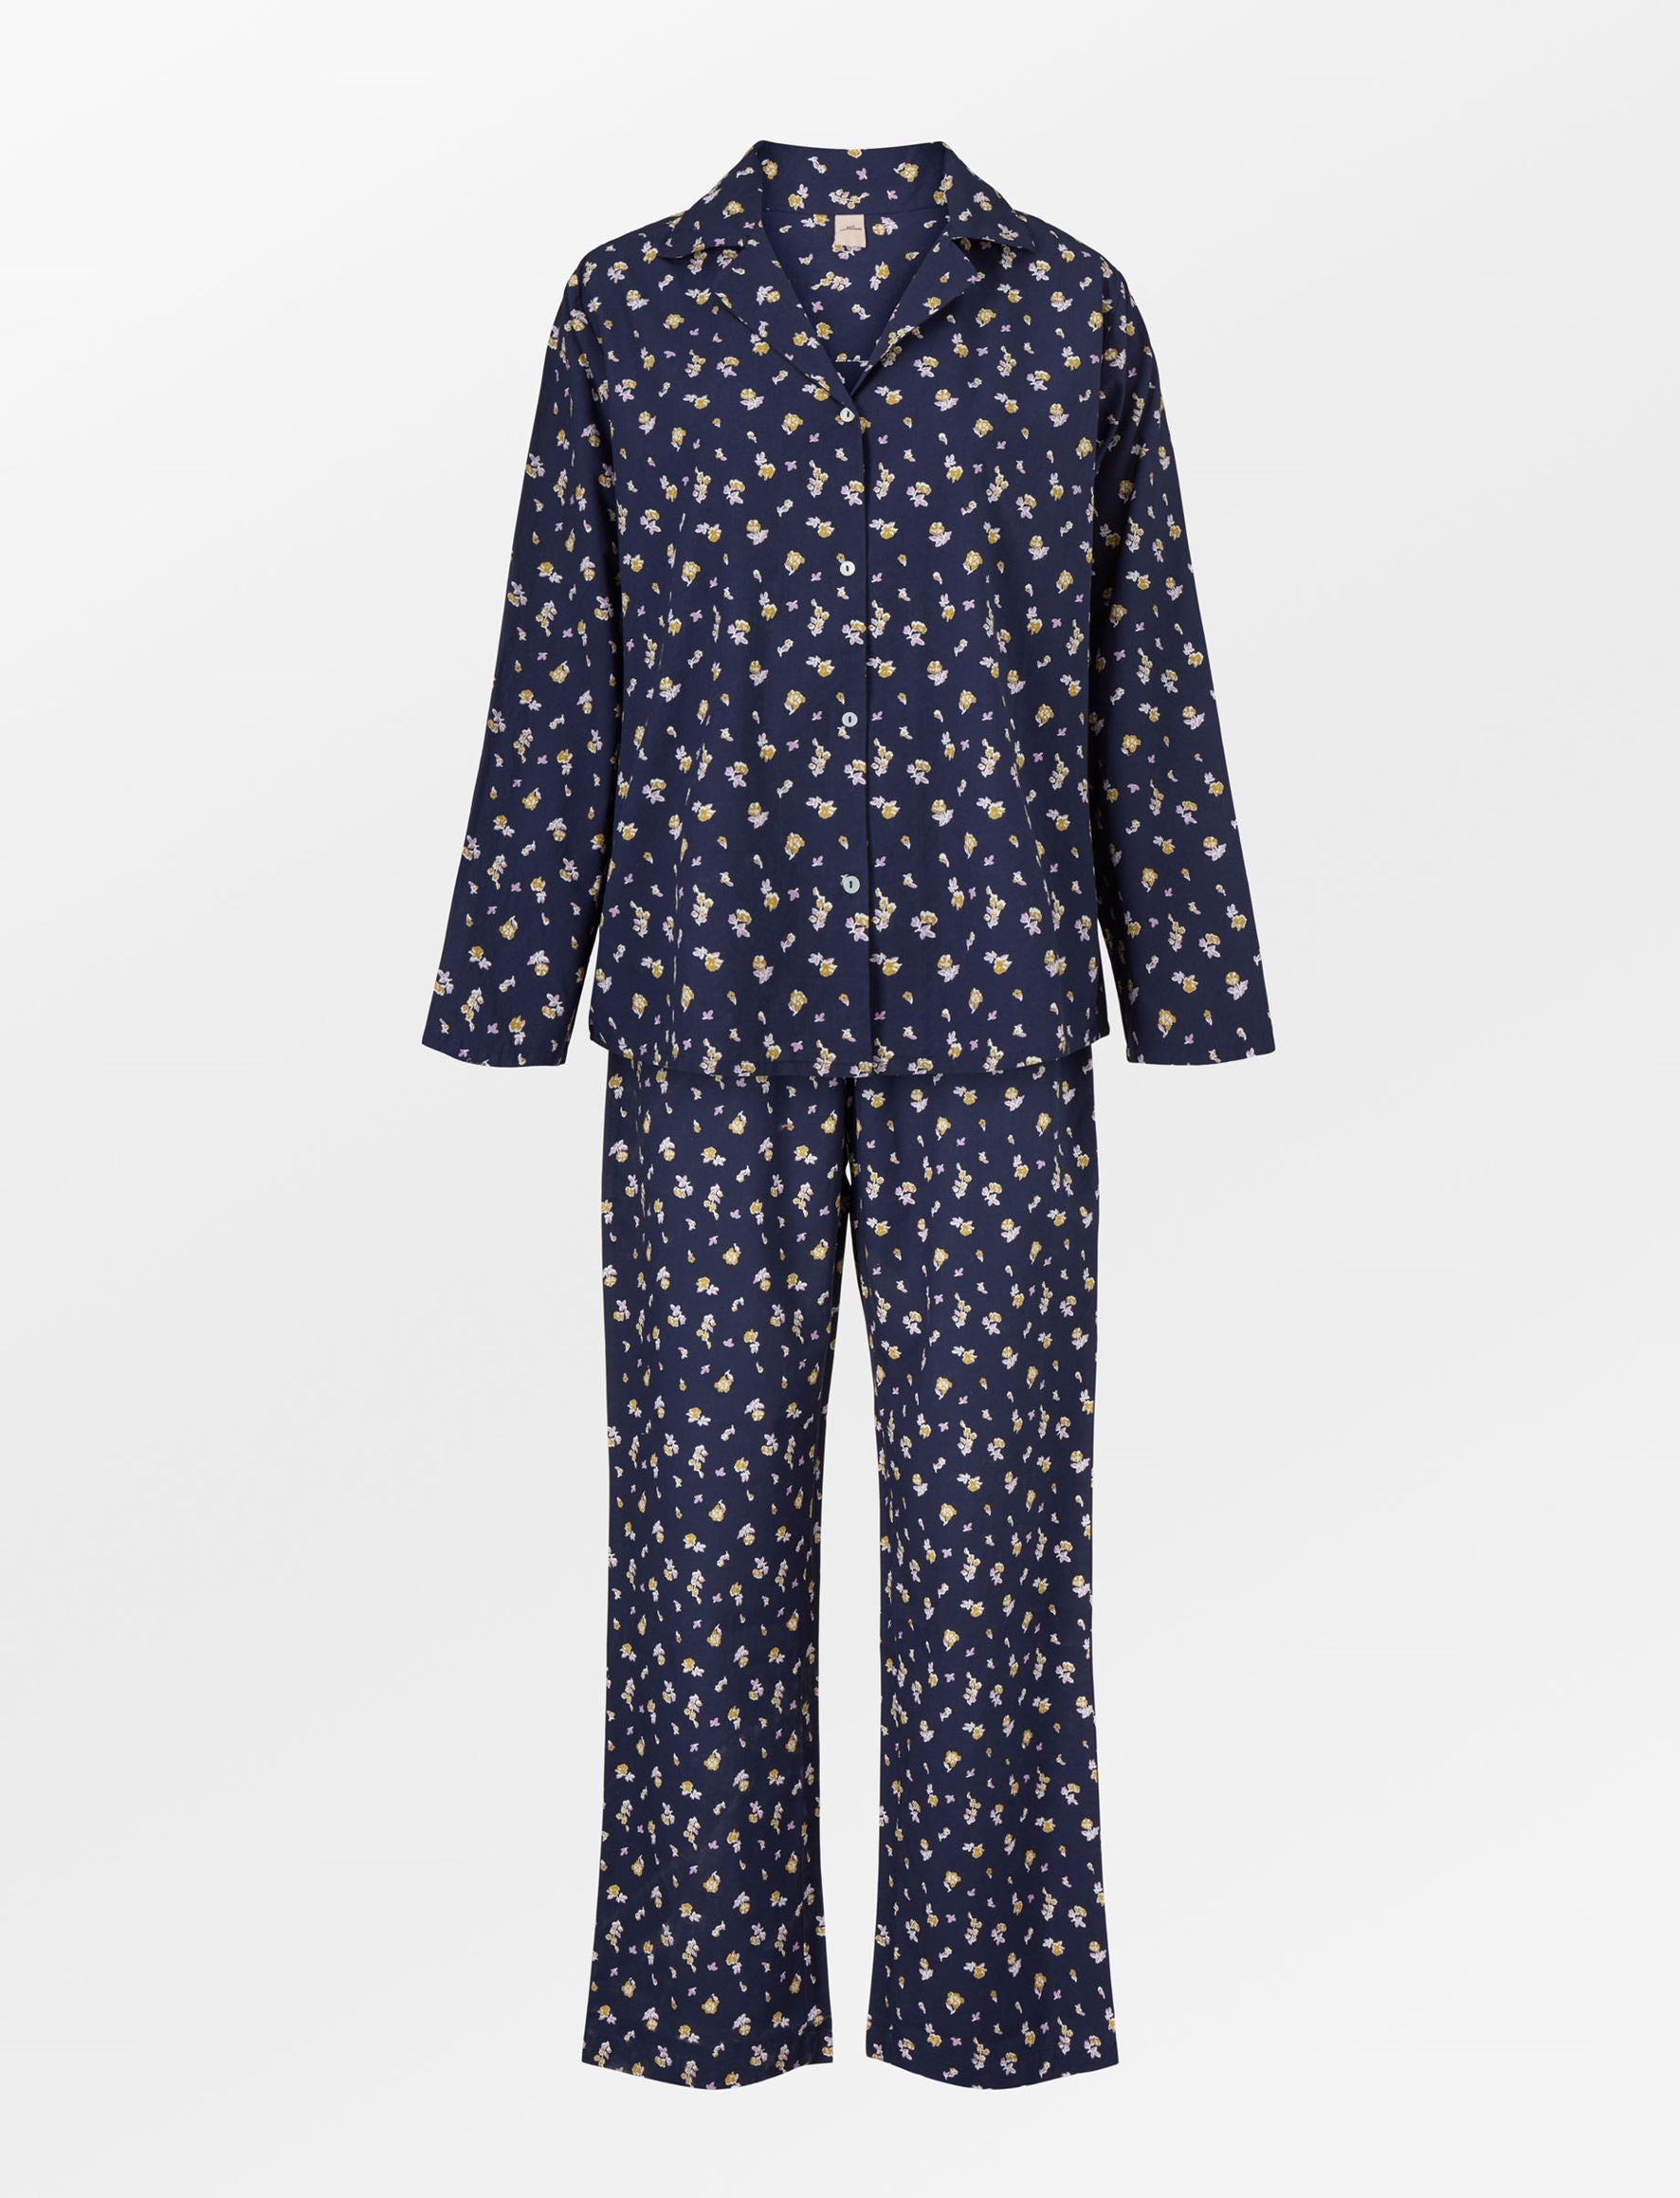 Becksöndergaard, Glance Pyjamas Set - Maritime Blue, archive, sale, sale, archive